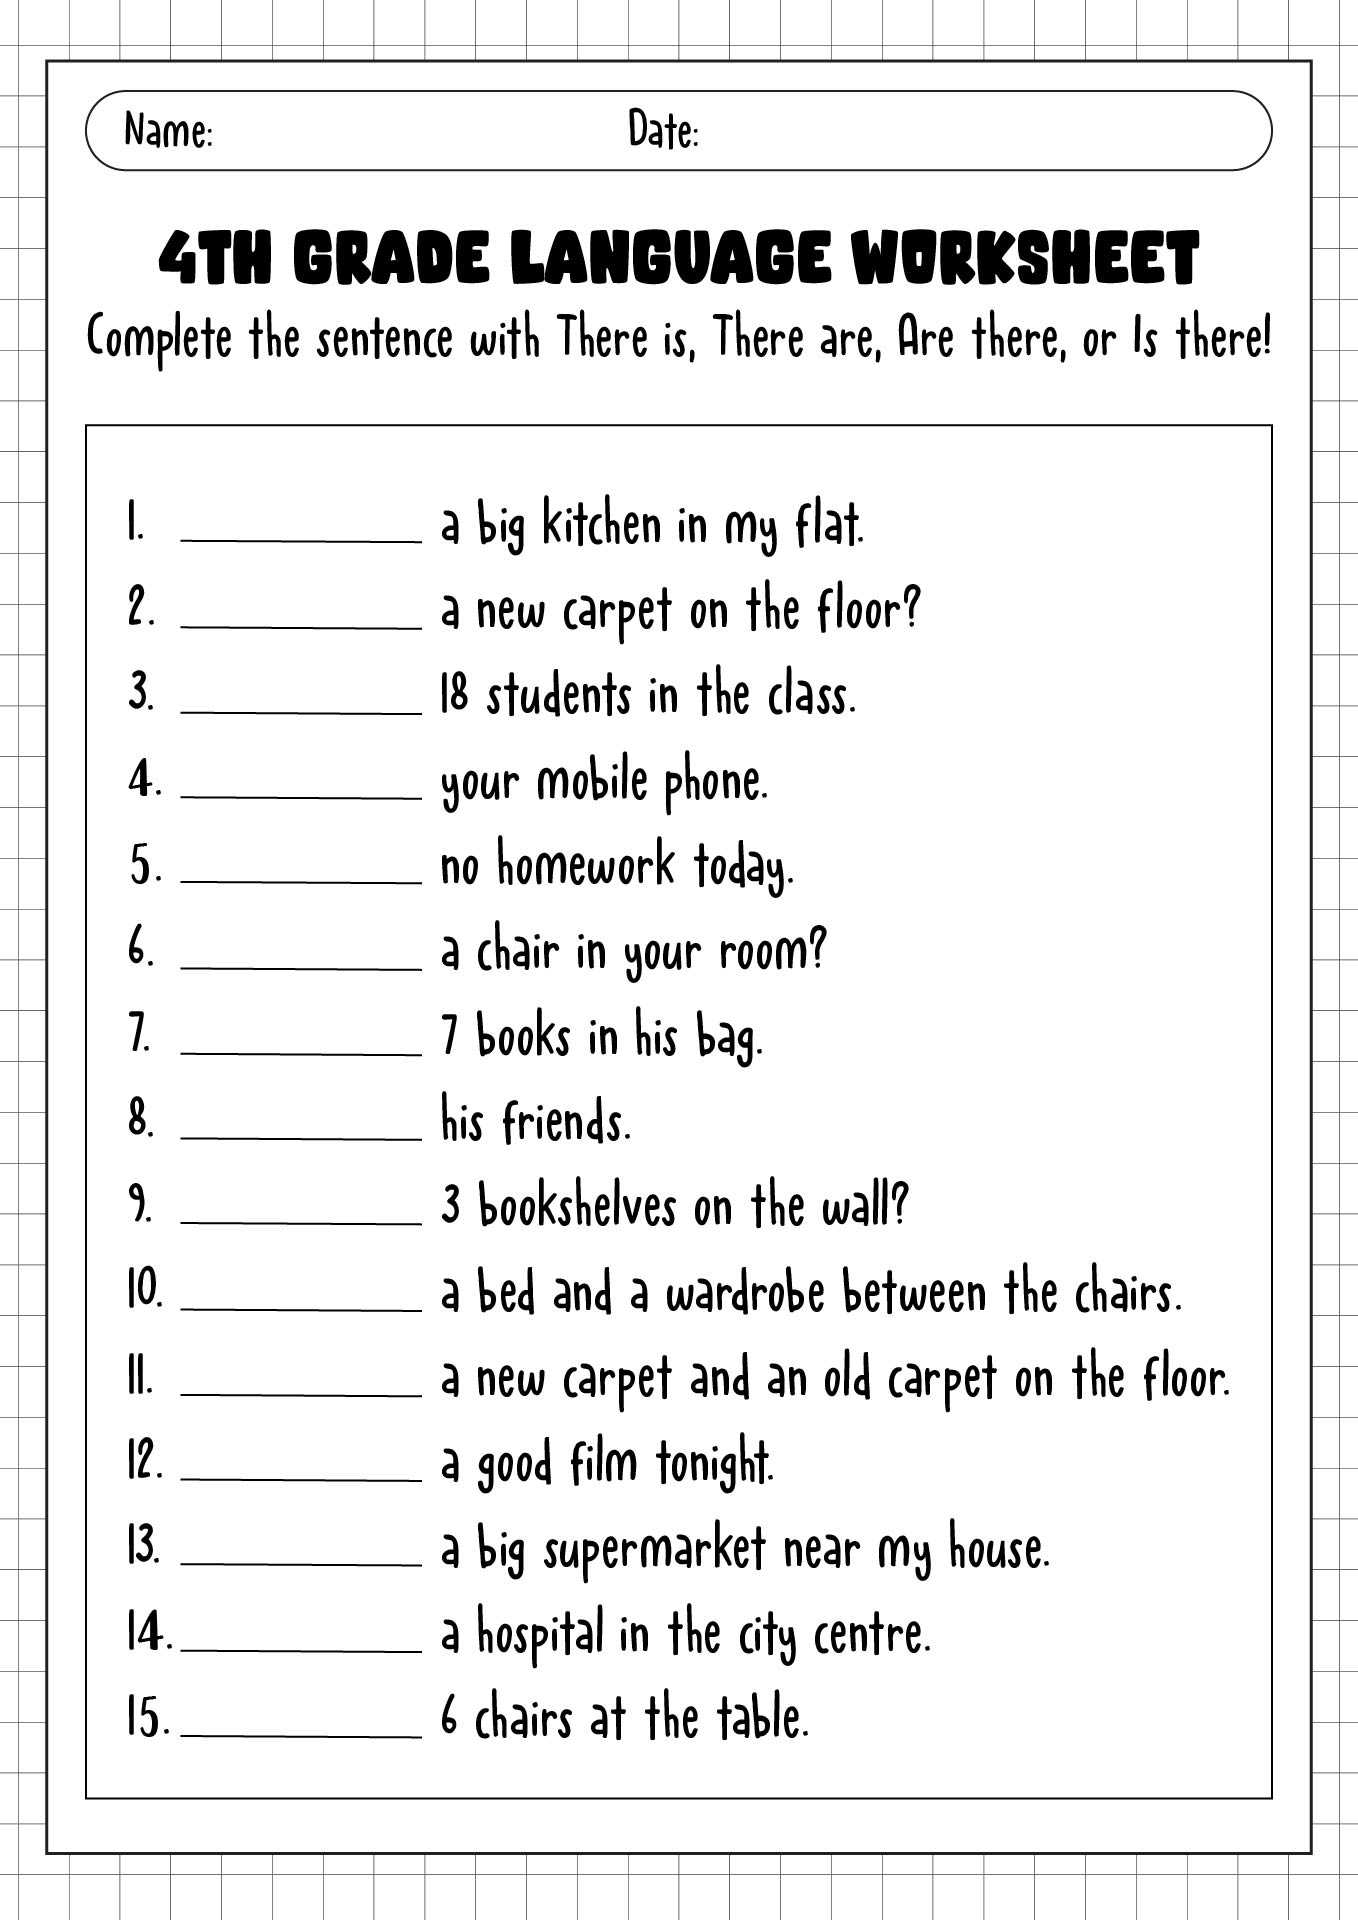 4th Grade Language Worksheets Image